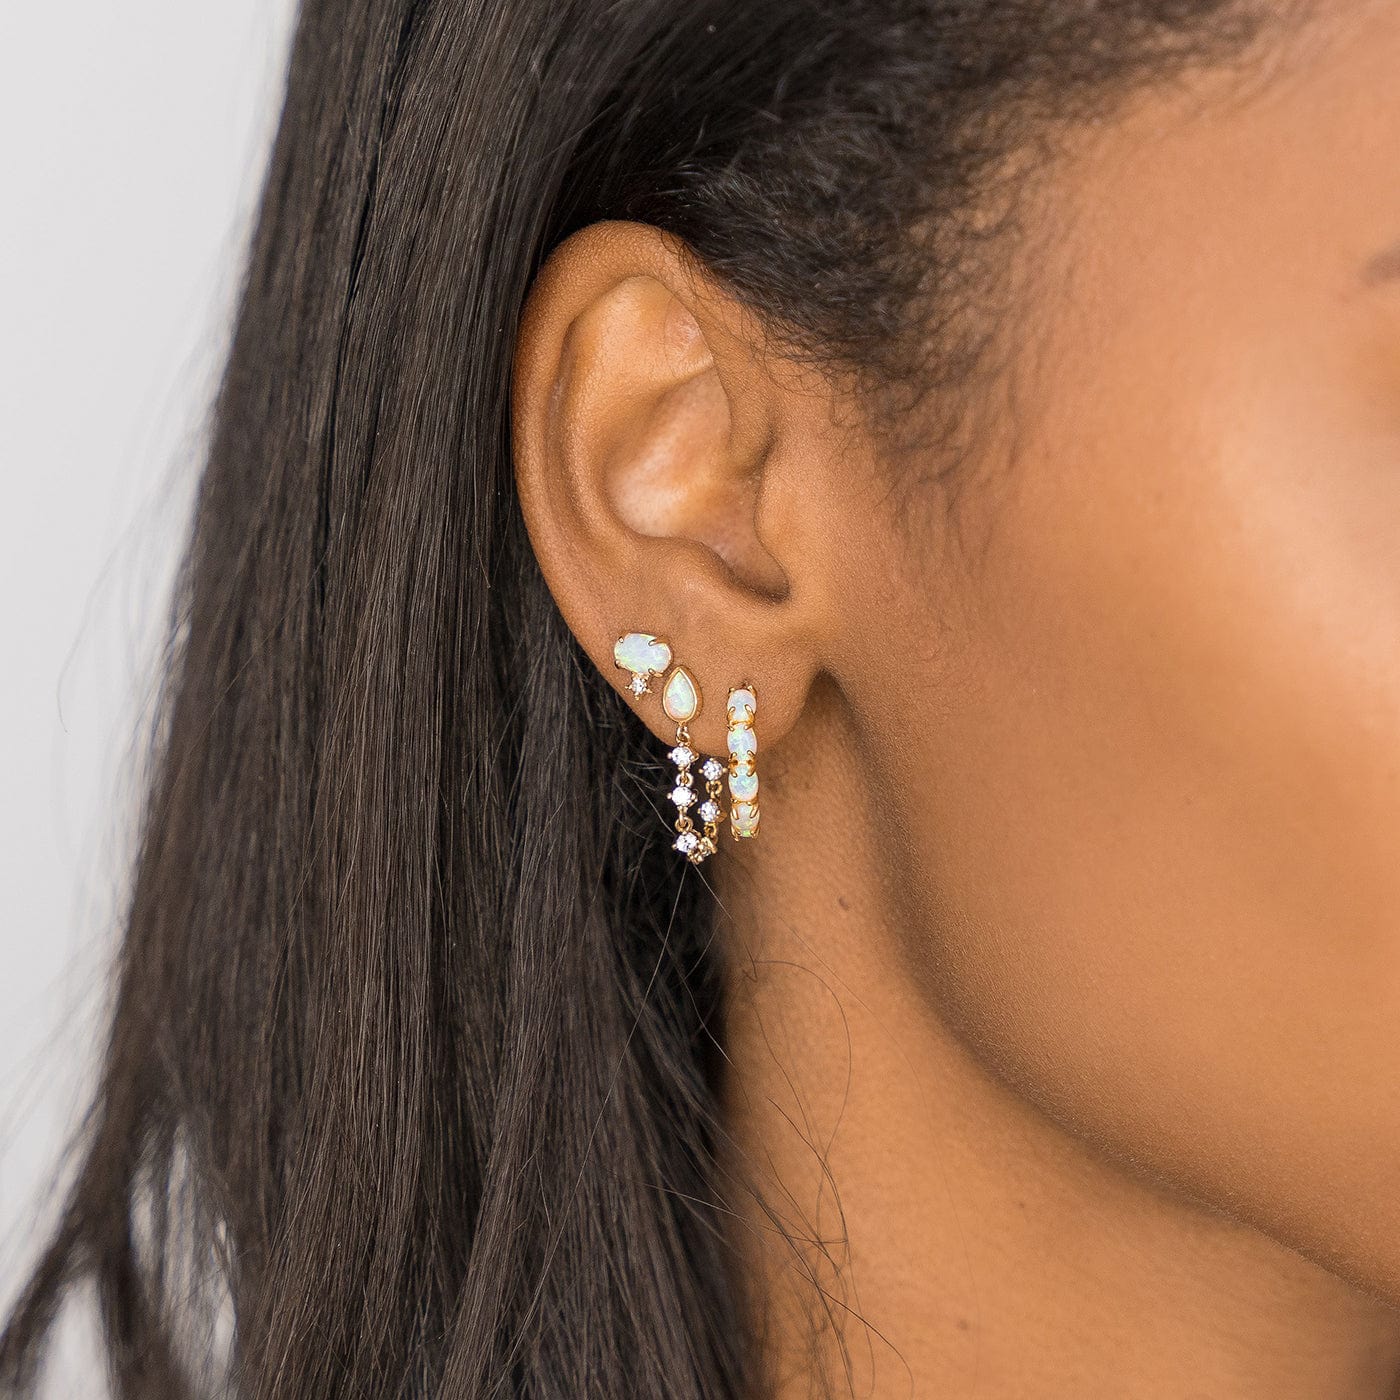 TAI JEWELRY Earrings Opal Studs With CZ Dangle Chain